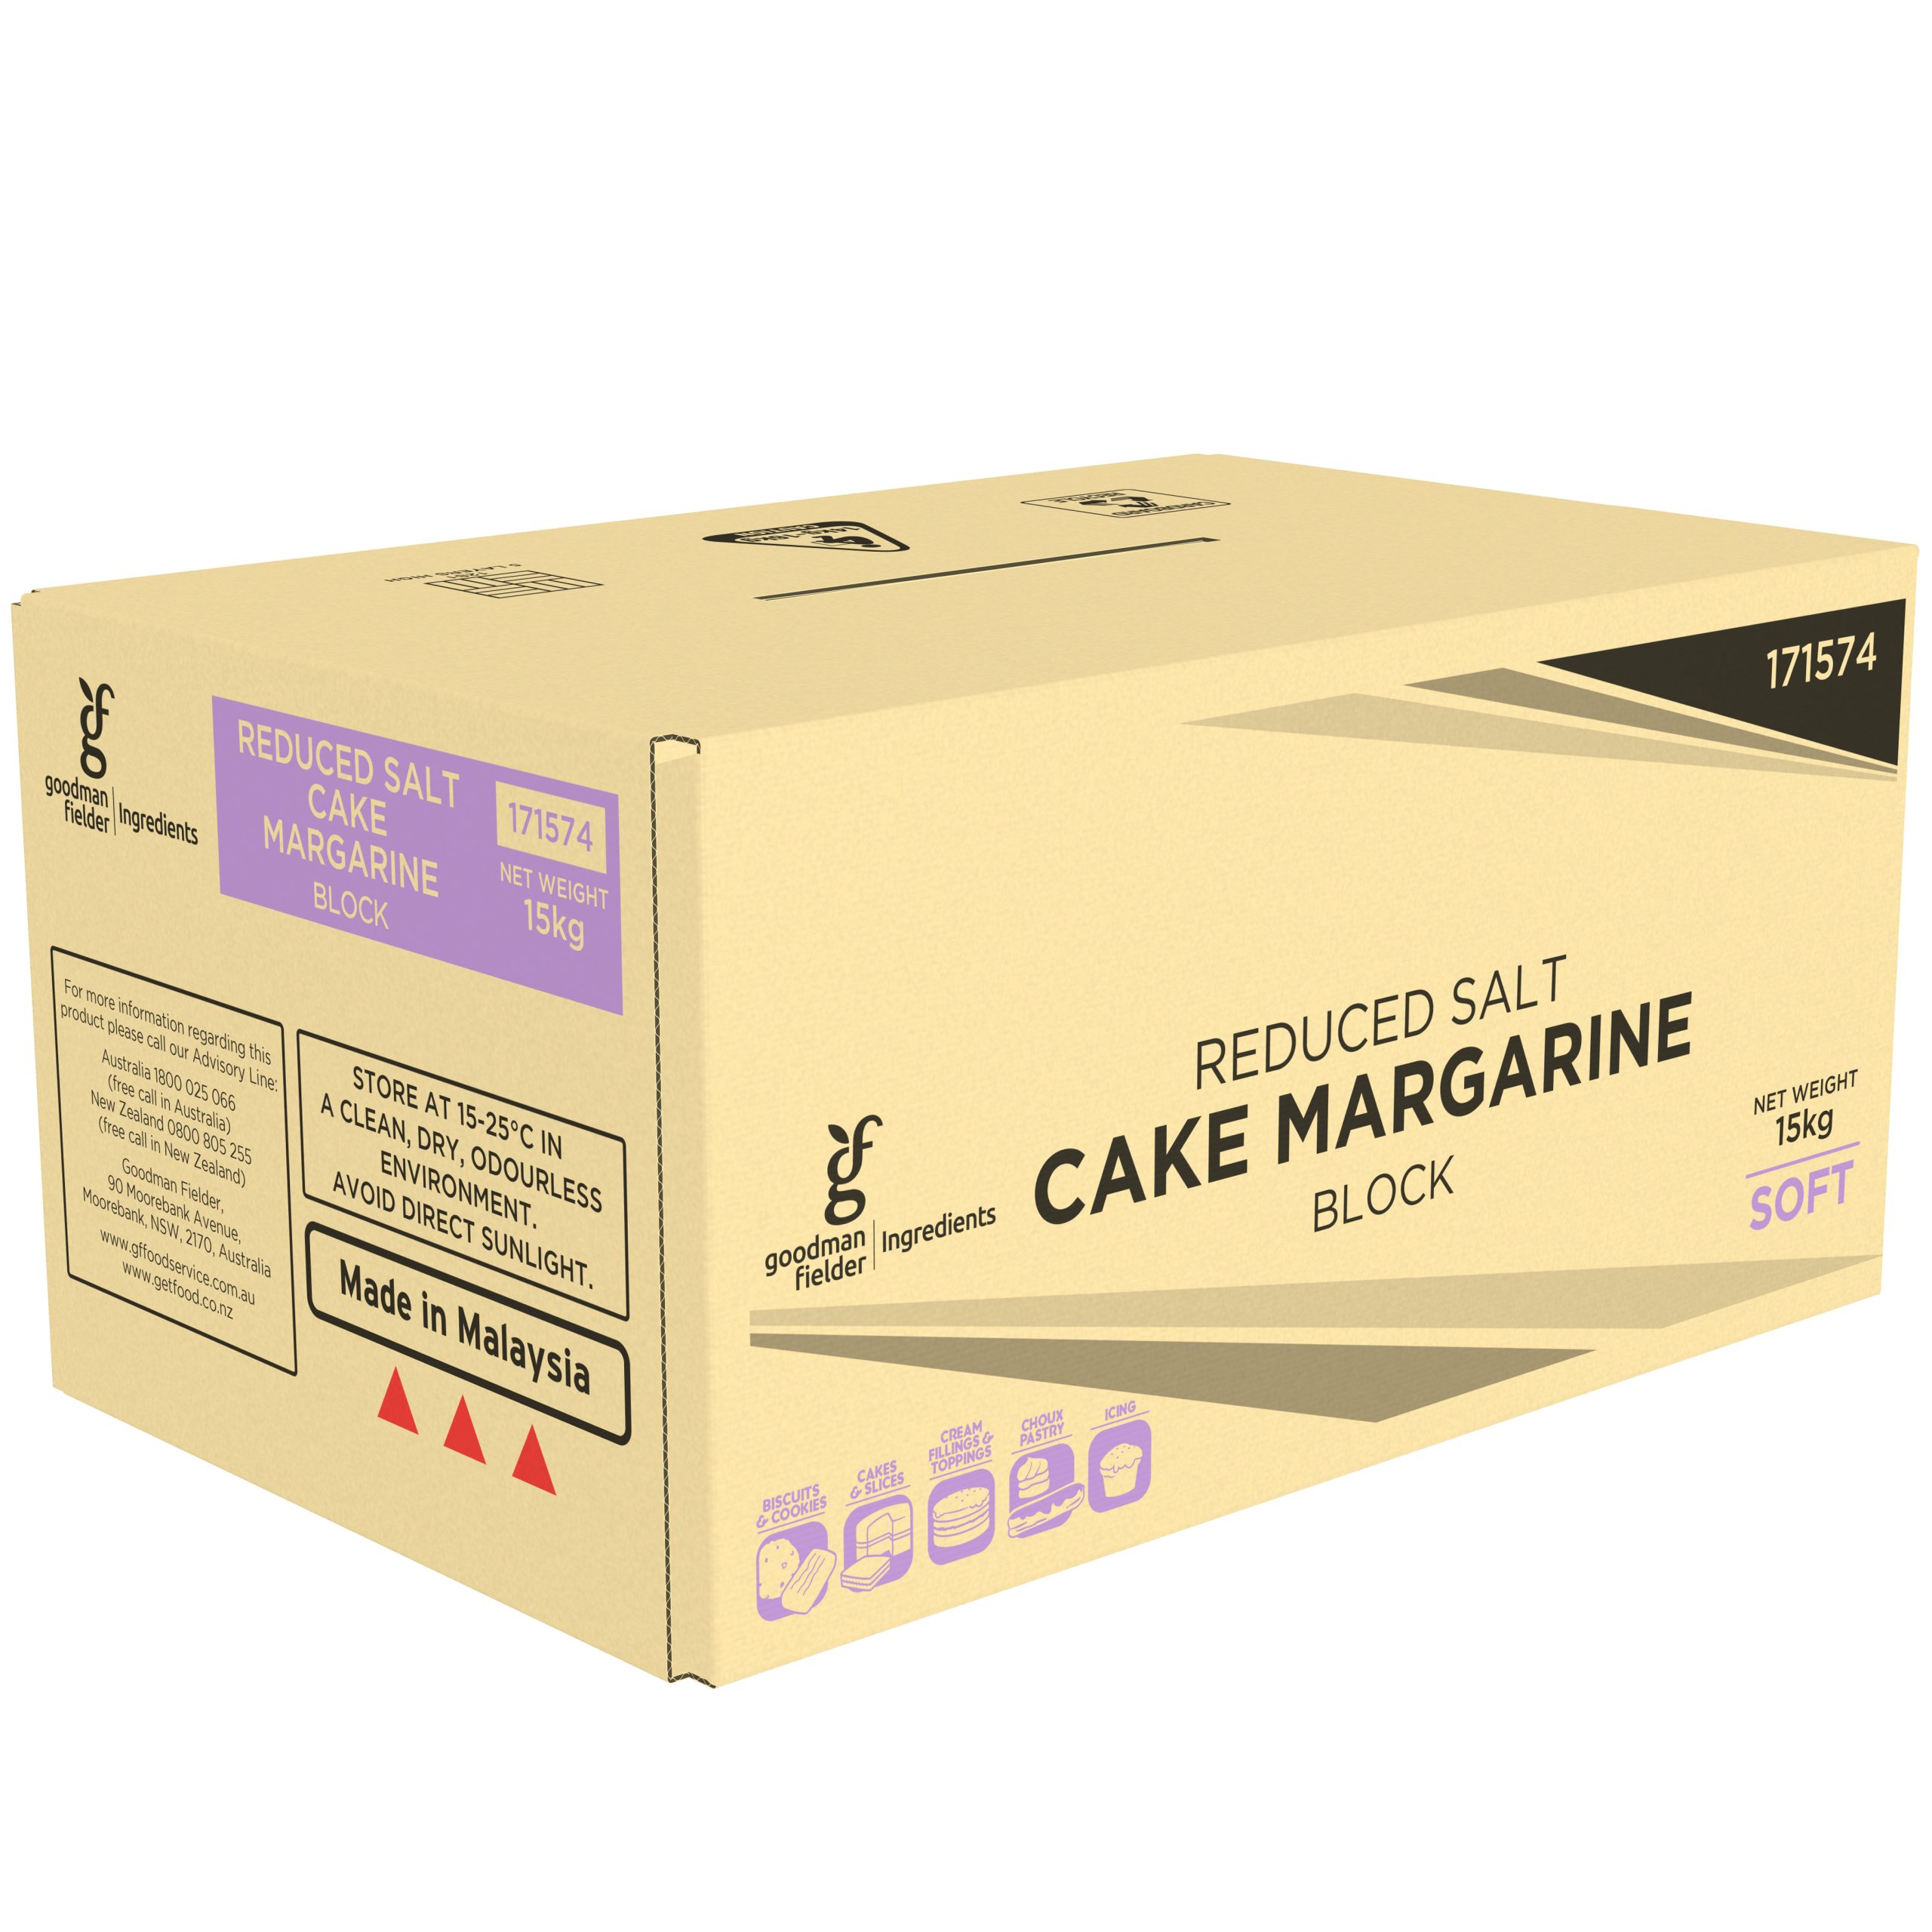 Goodman Fielder Ingredients Reduced Salt Cake Margarine Block Soft 15kg product photo